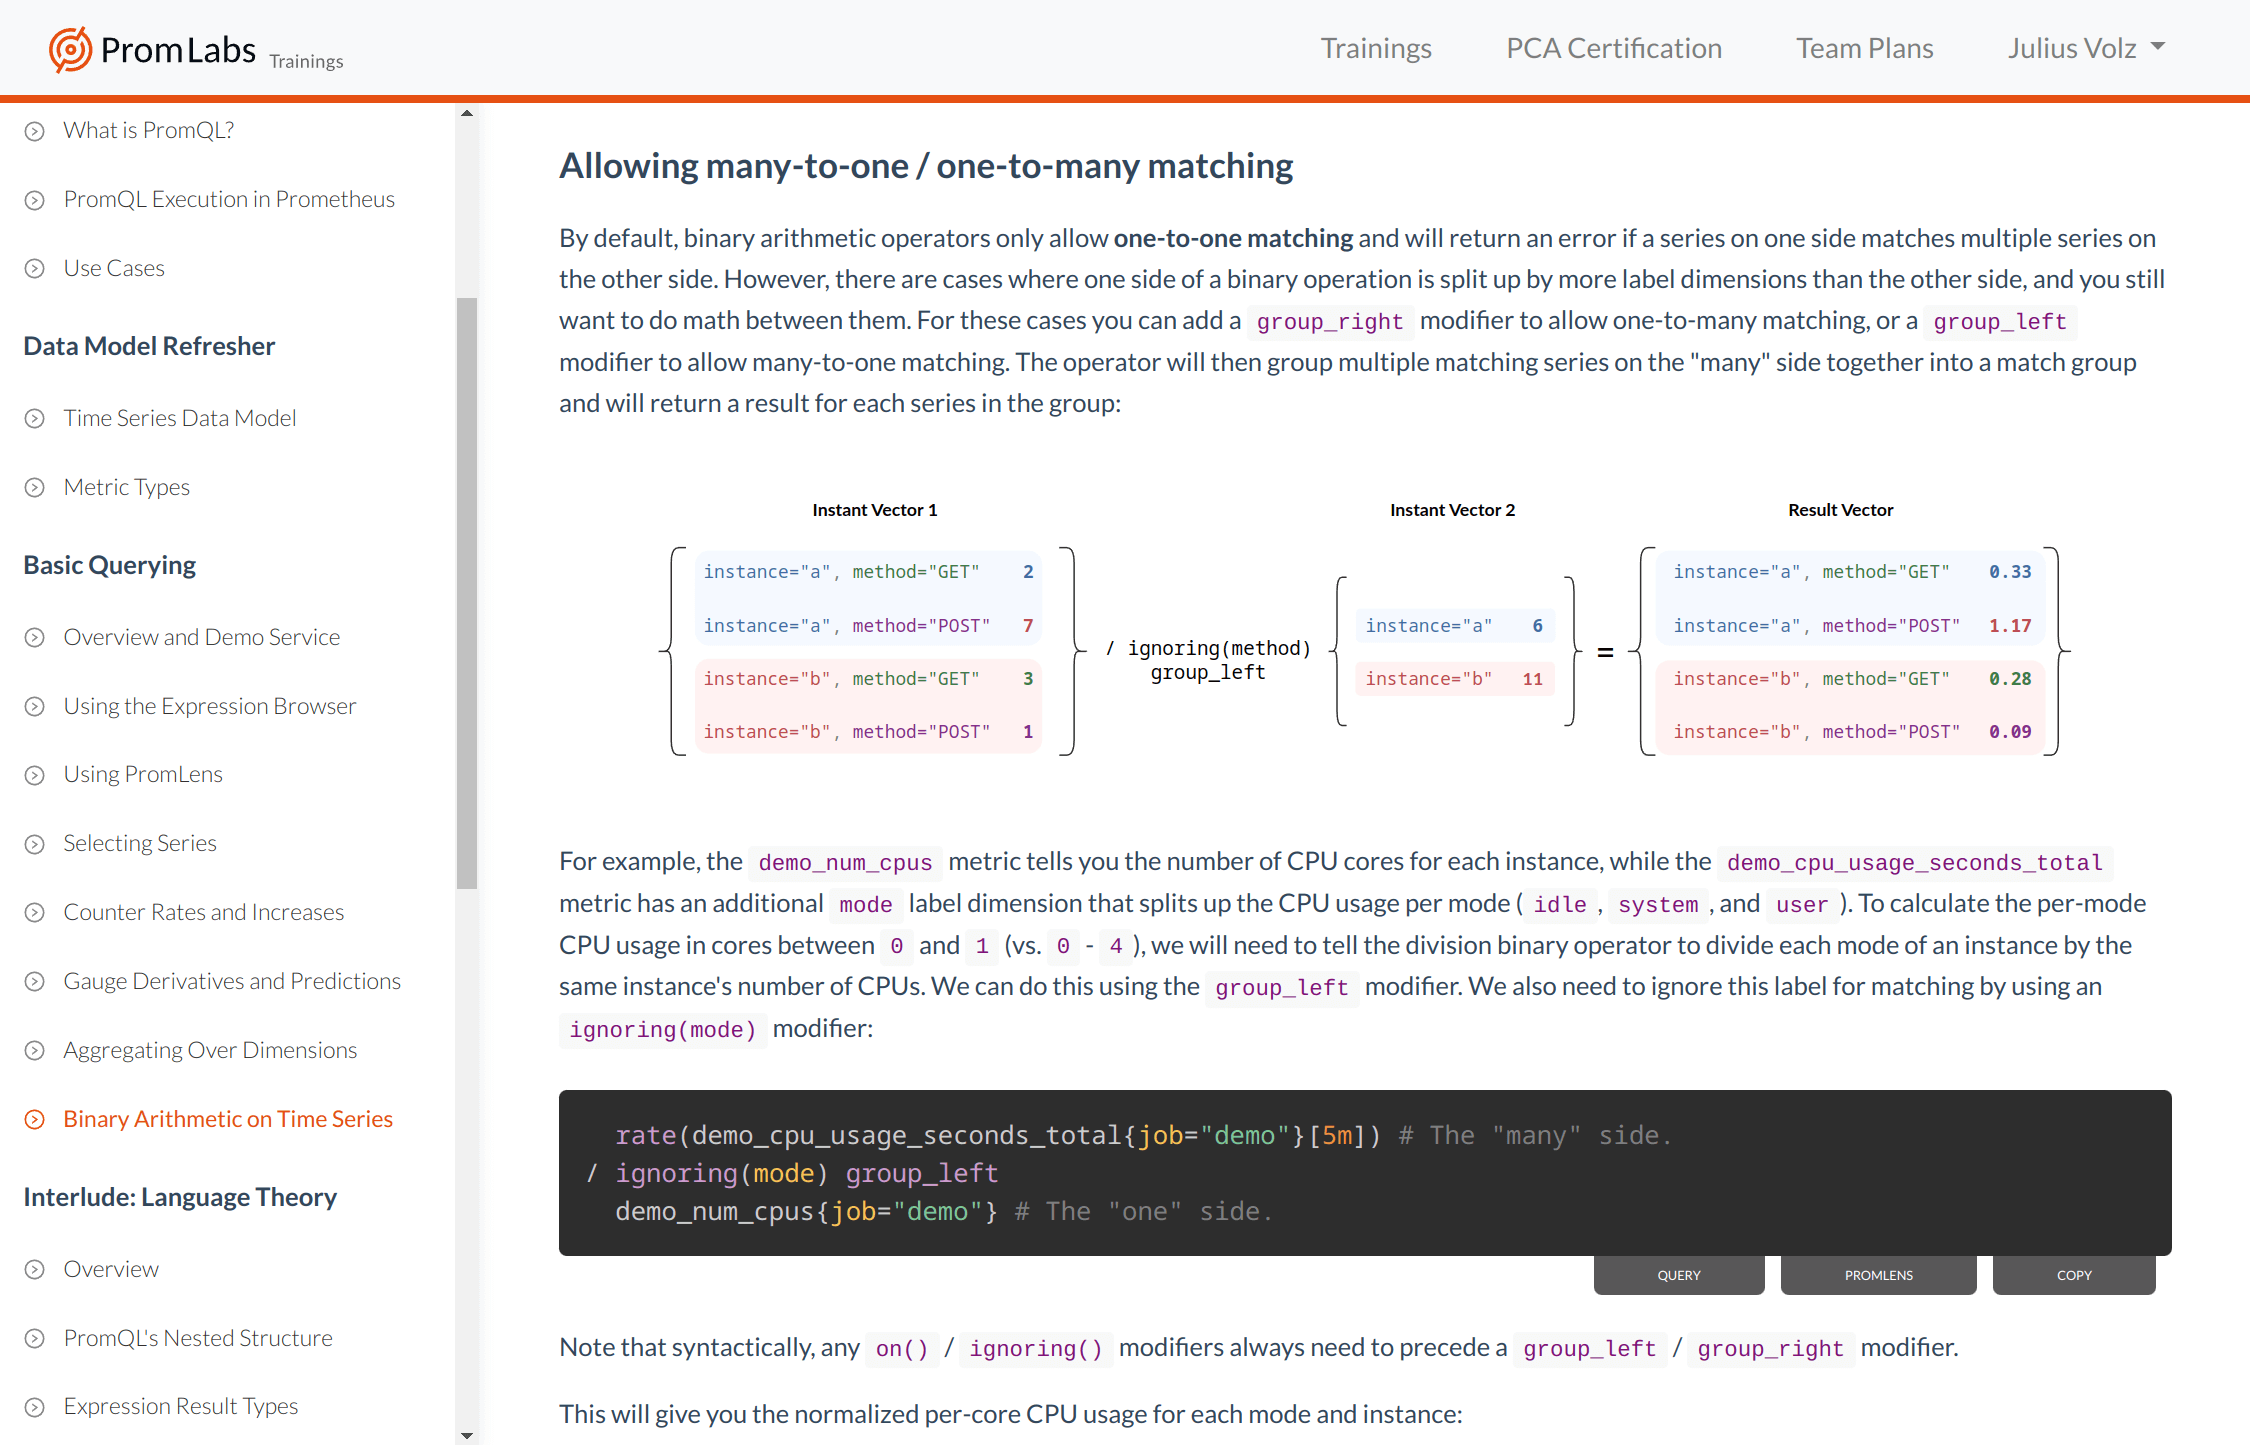 Training screenshot showing vector matching explanations